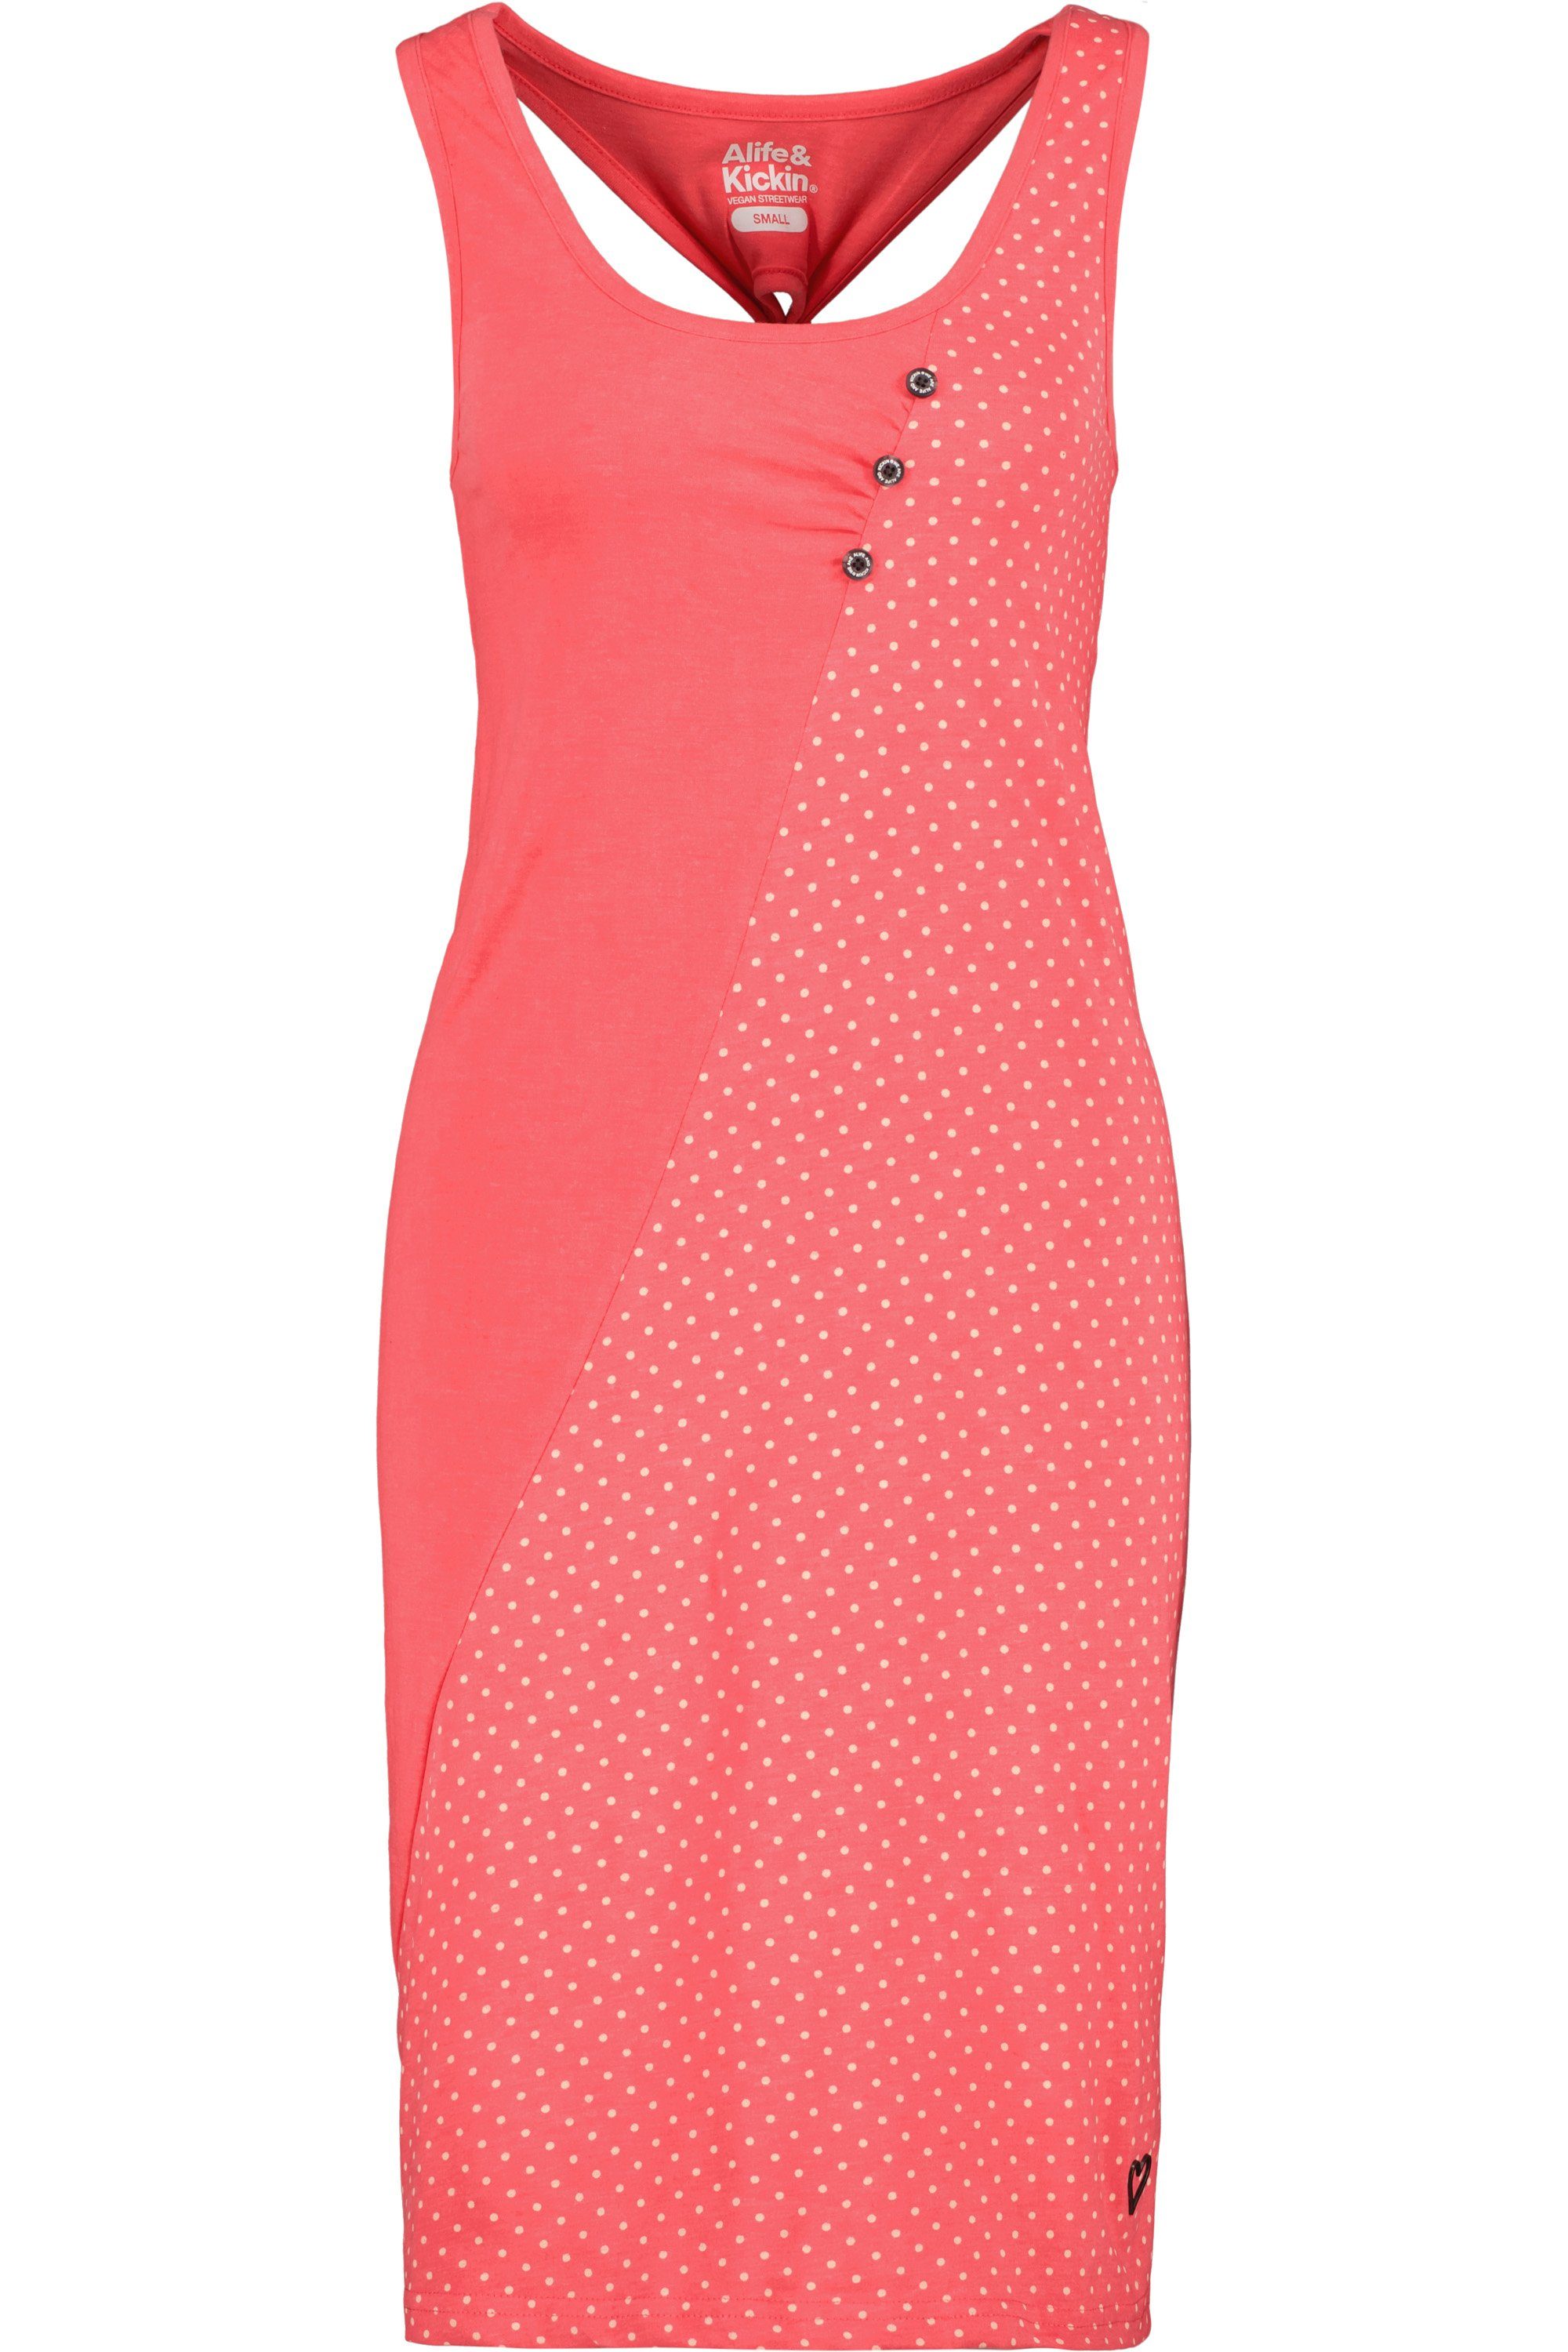 Alife B Kleid coral Dress Sommerkleid Sleeveless Damen & CameronAK Kickin Sommerkleid, melange